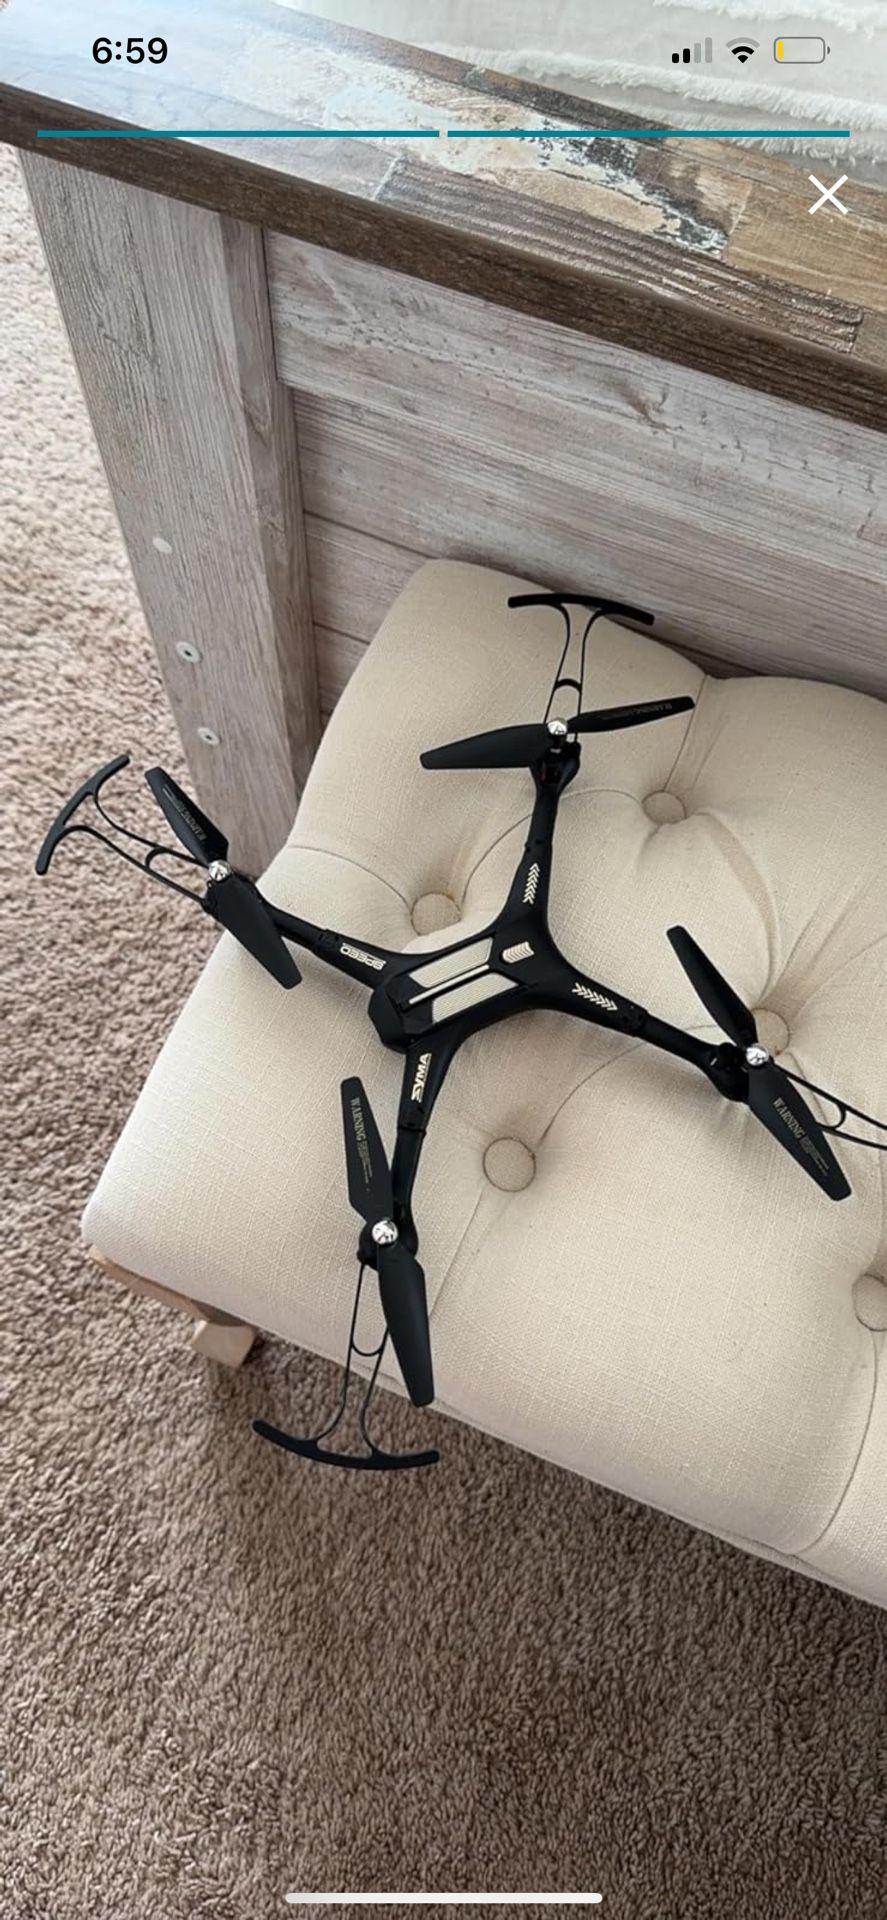 Drone With Camera, SYMA X600W Foldable 1080P FPV Camera Drone, Remote Control Quadcopter With Altitude Hold VR, 